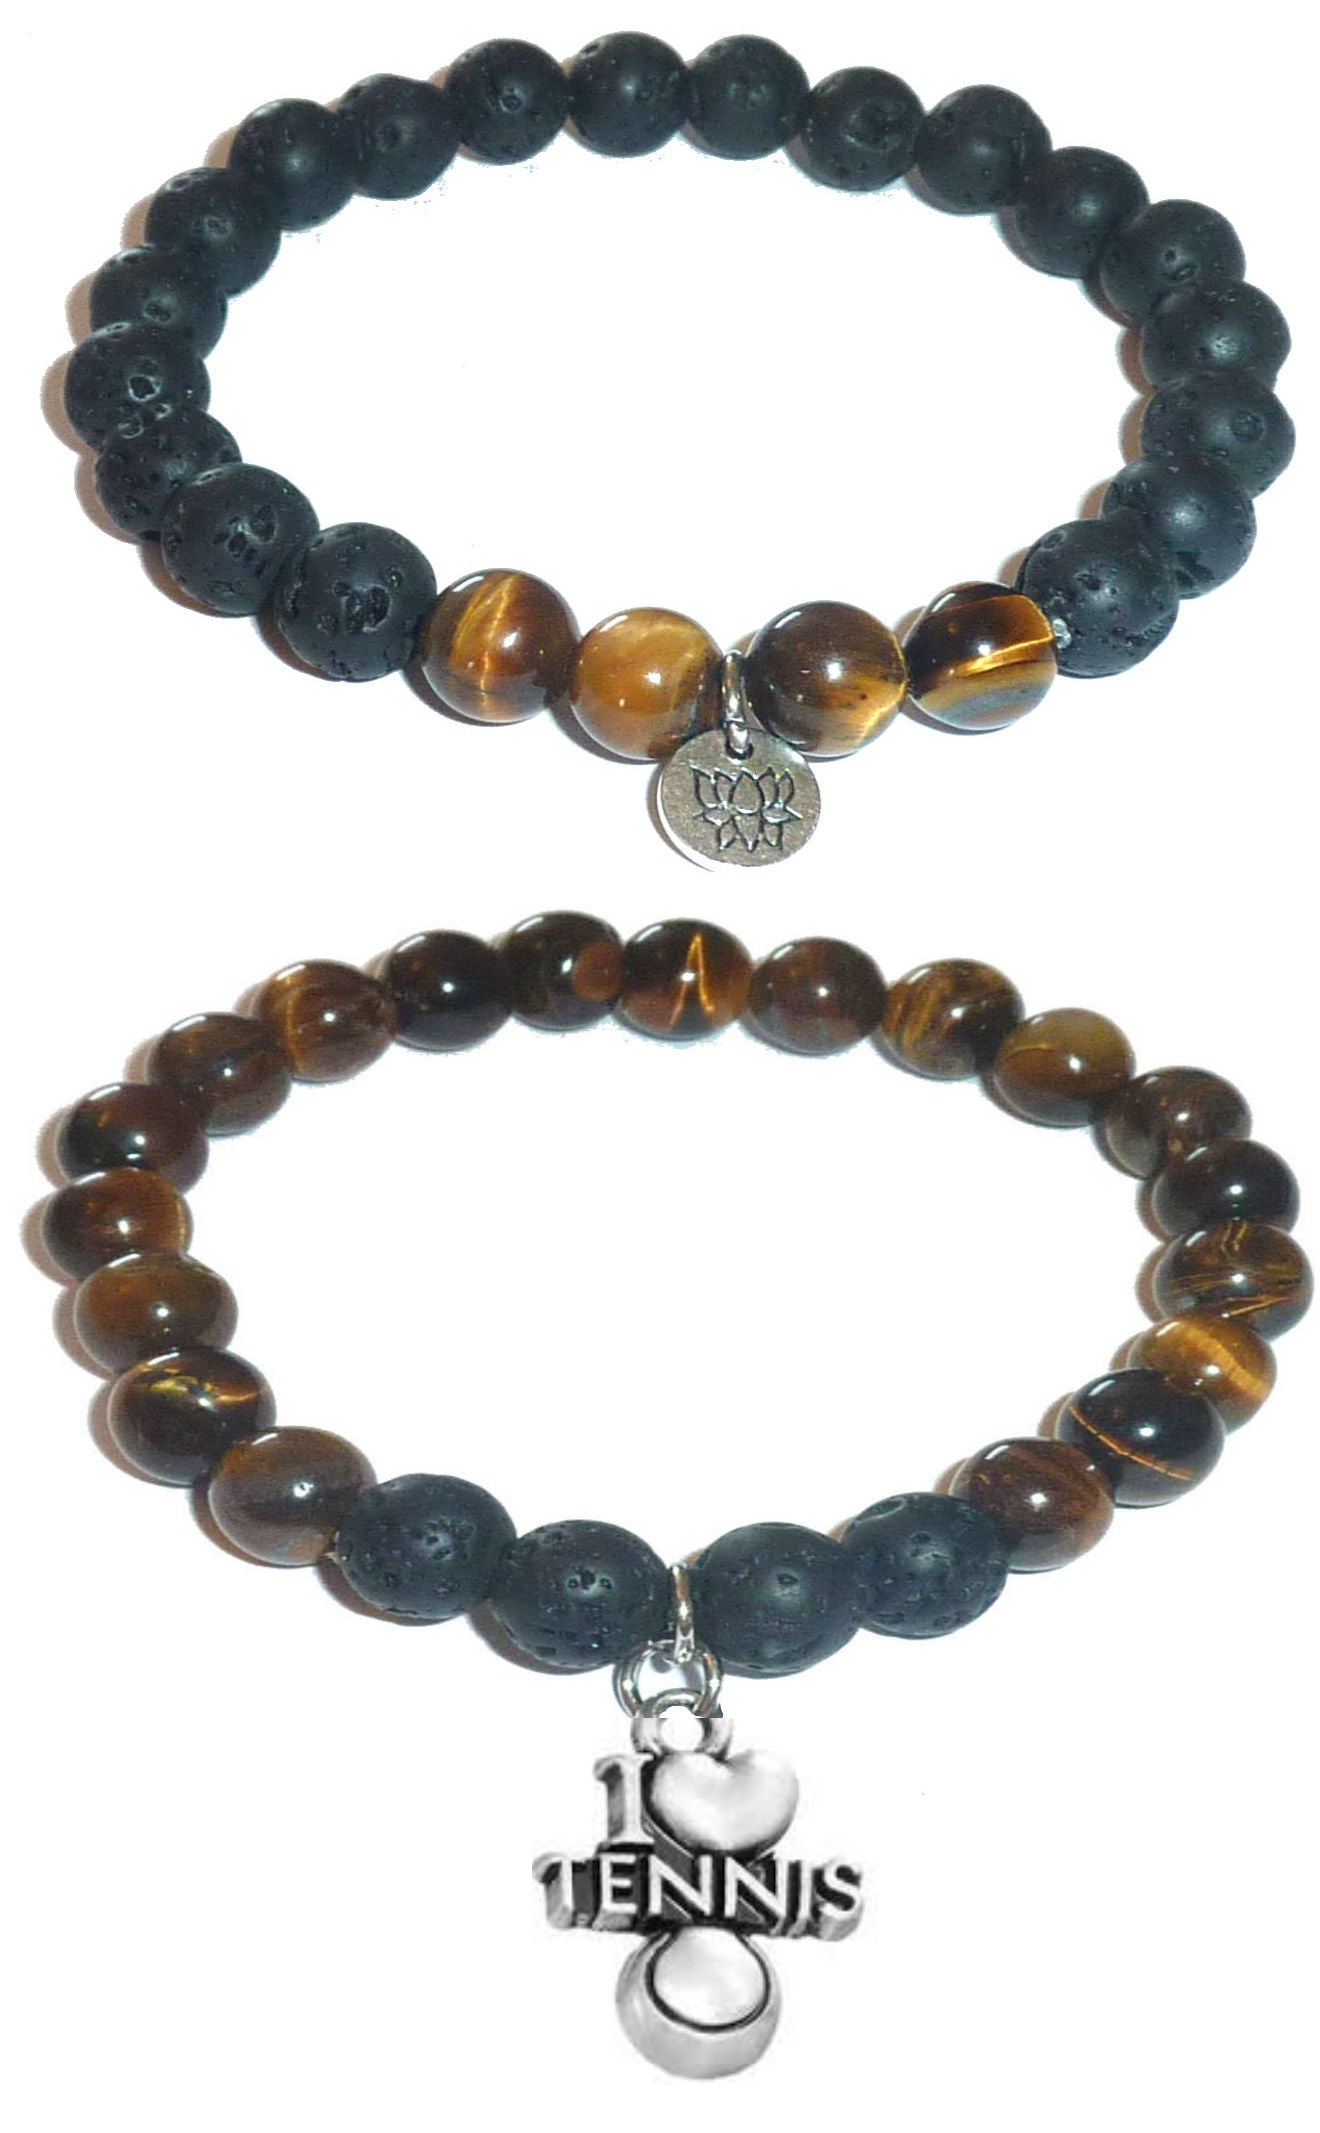 I Love Tennis - Women's Tiger Eye & Black Lava Diffuser Yoga Beads Charm Stretch Bracelet Gift Set